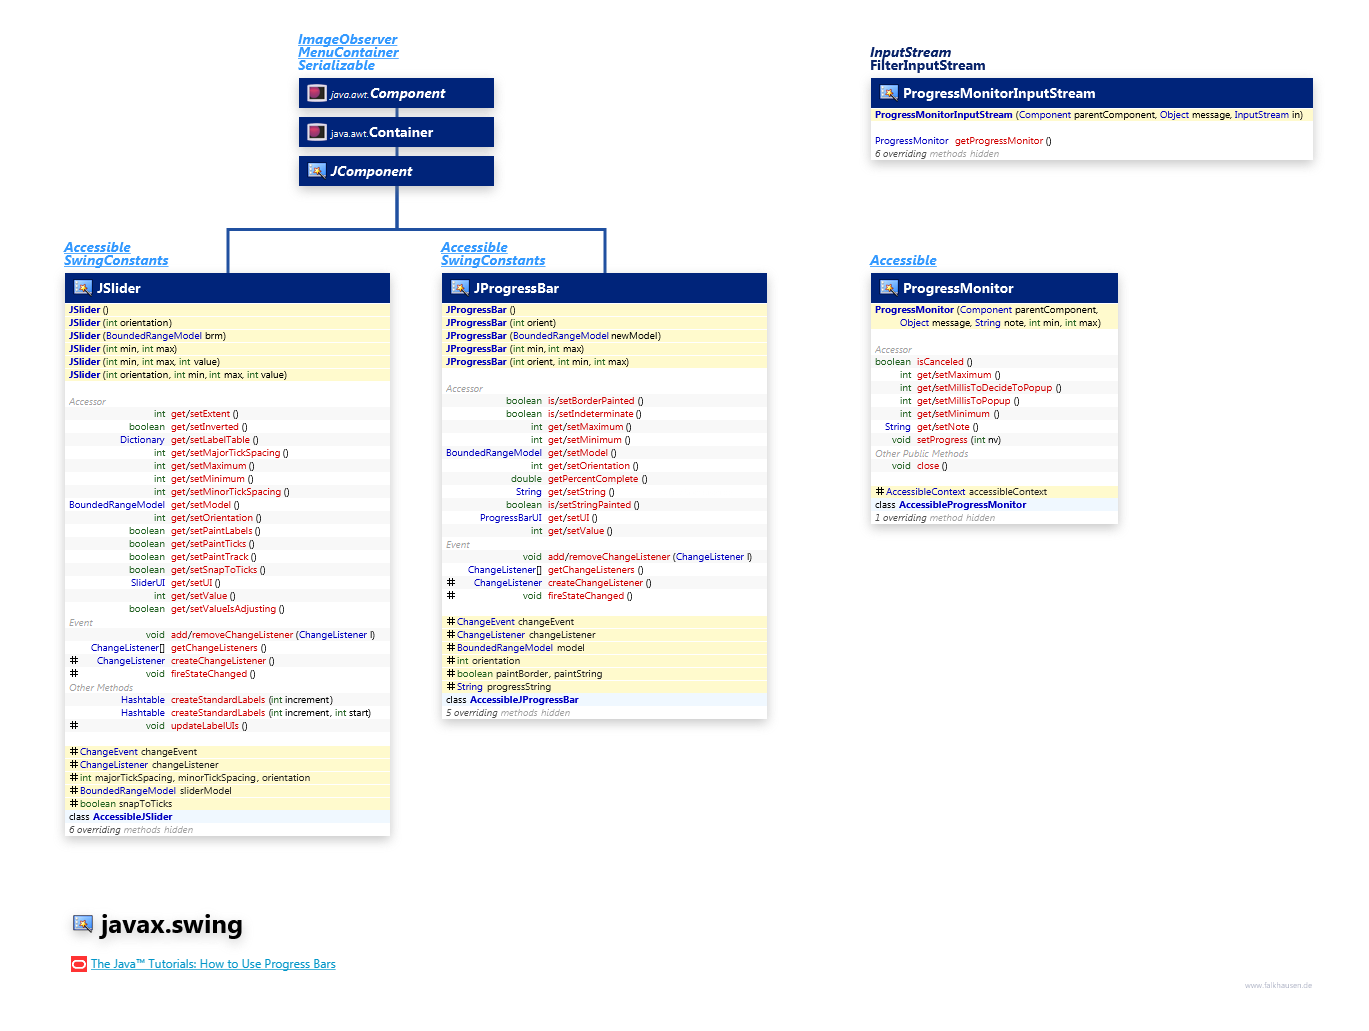 javax.swing JSlider, JProgressBar class diagram and api documentation for Java 7